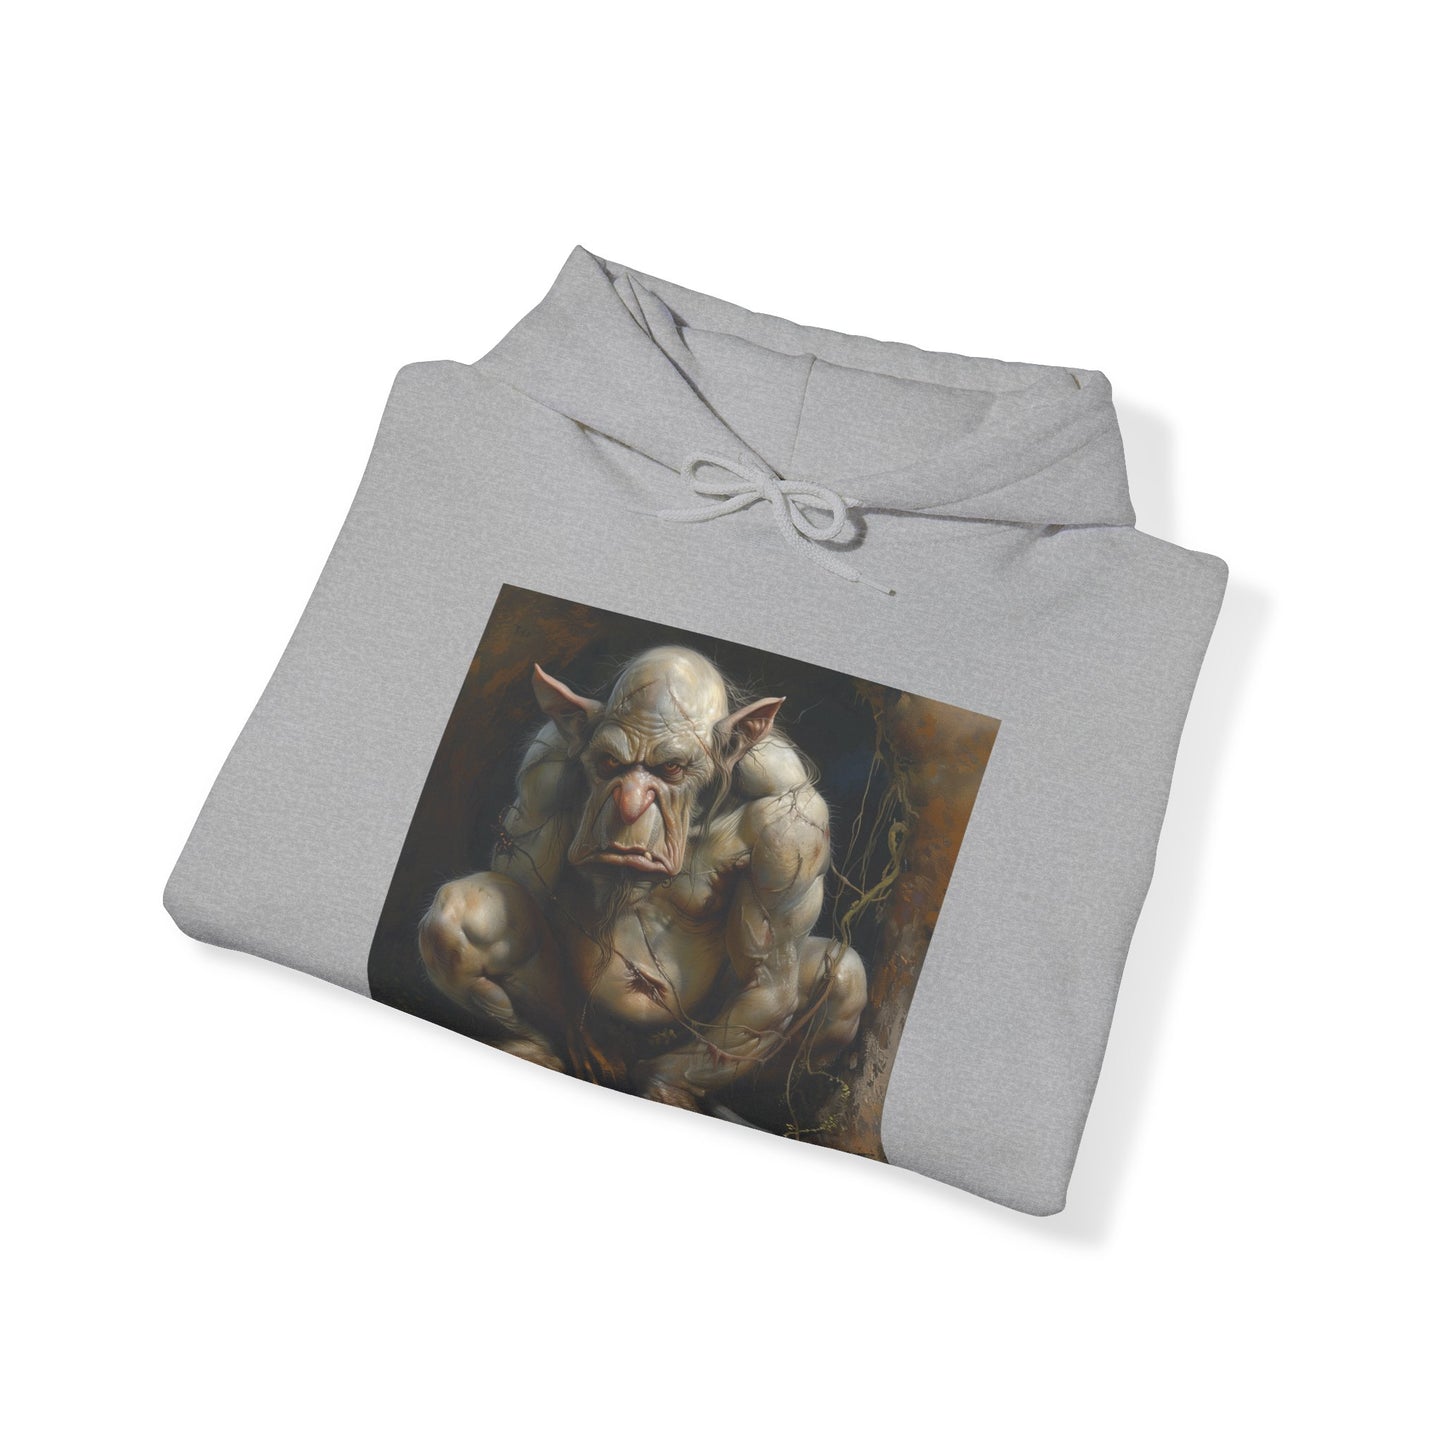 Unisex Heavy Blend™ Hooded Sweatshirt: Nasty Troll